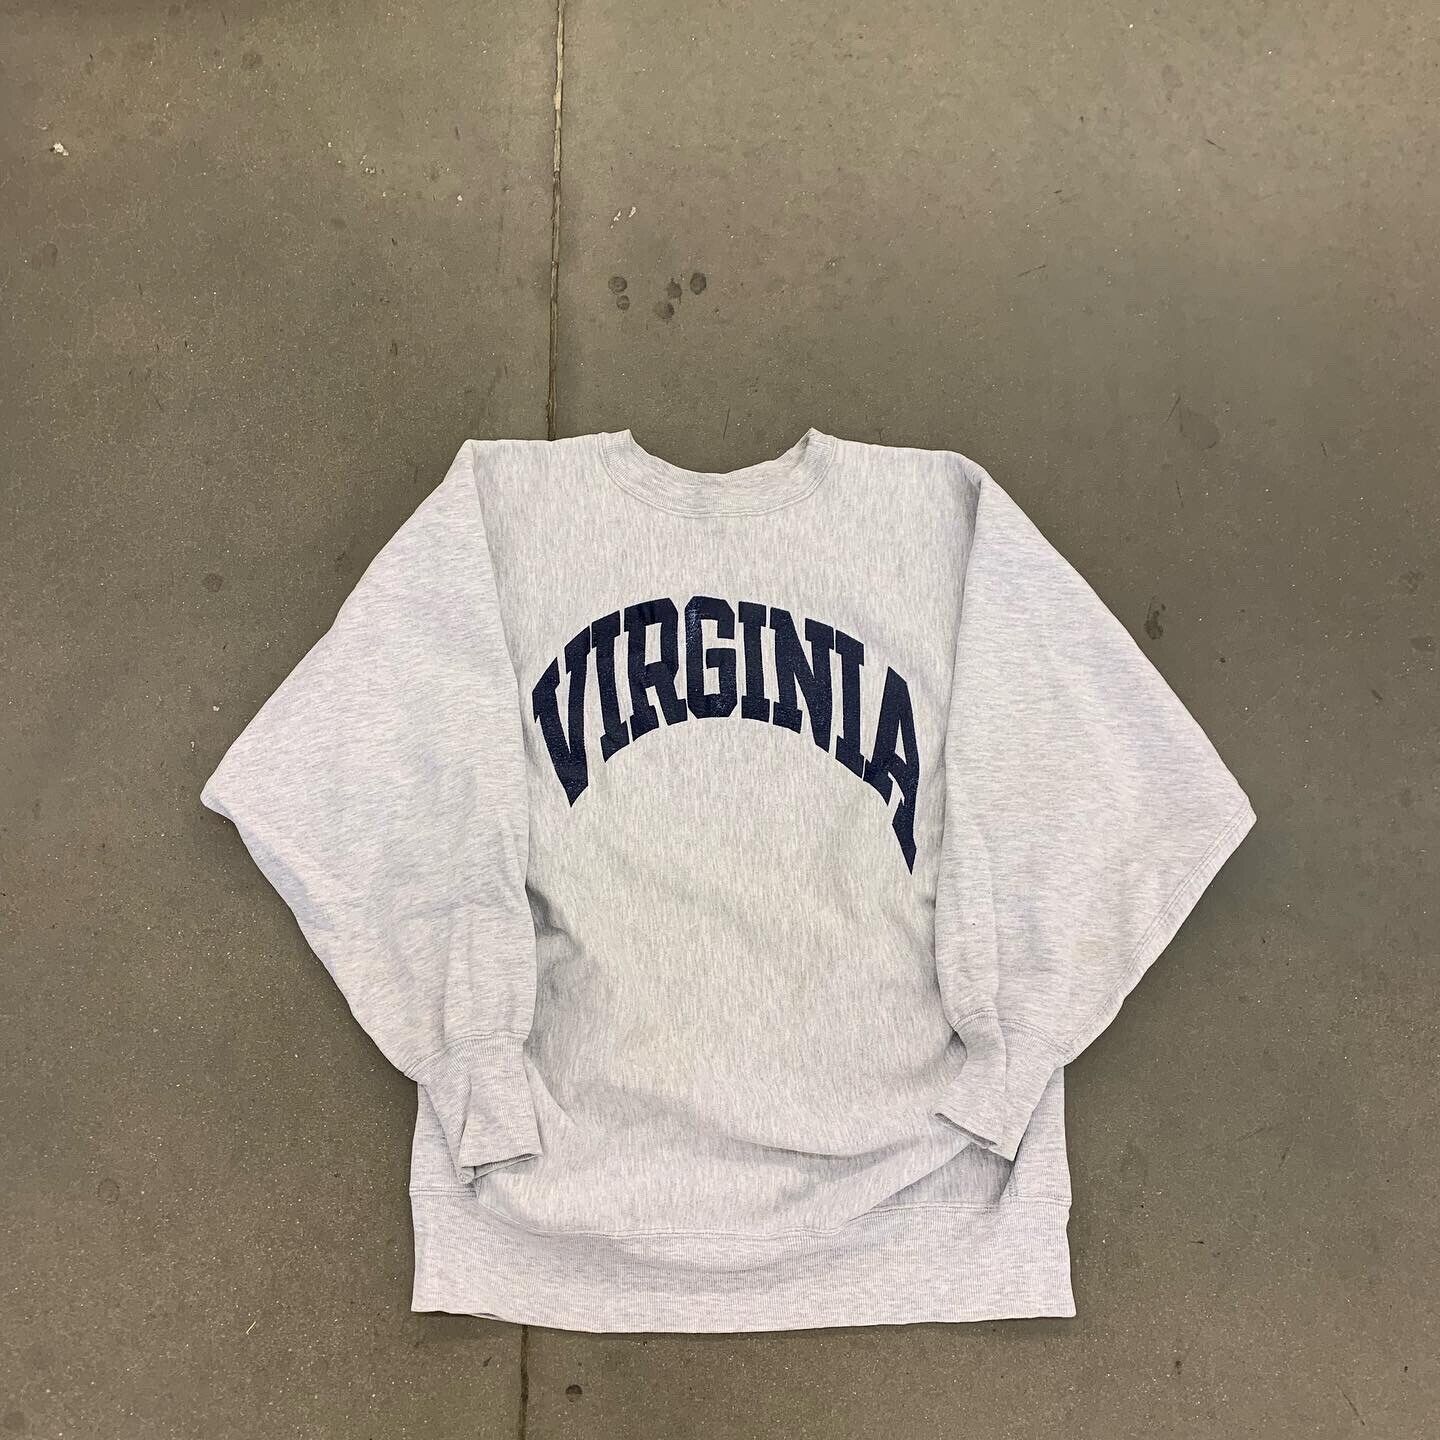 Vintage Champion Reverse Weave Virginia Sweatshirt 80s 90s | eBay